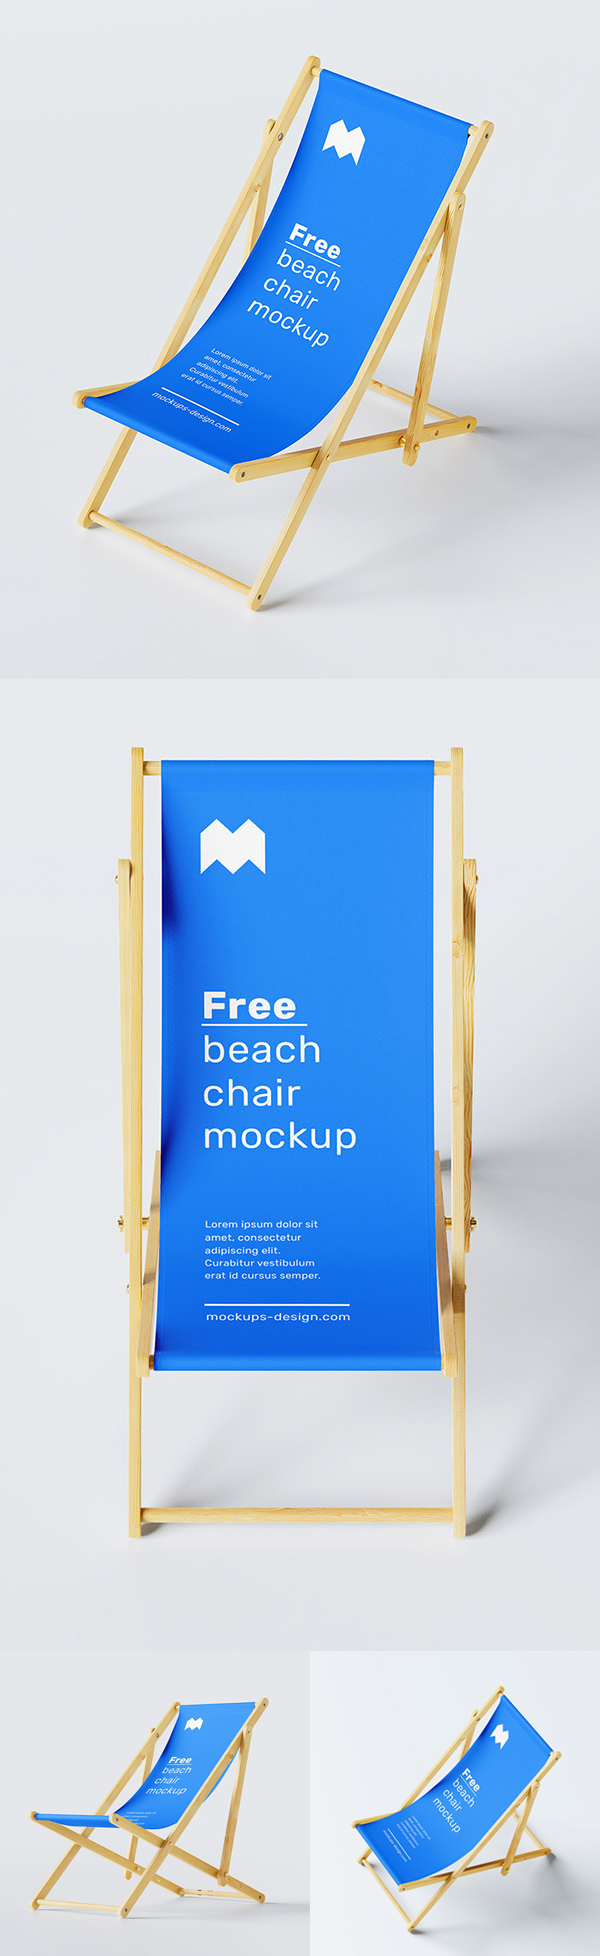 Free Beach Chair Mockup PSD